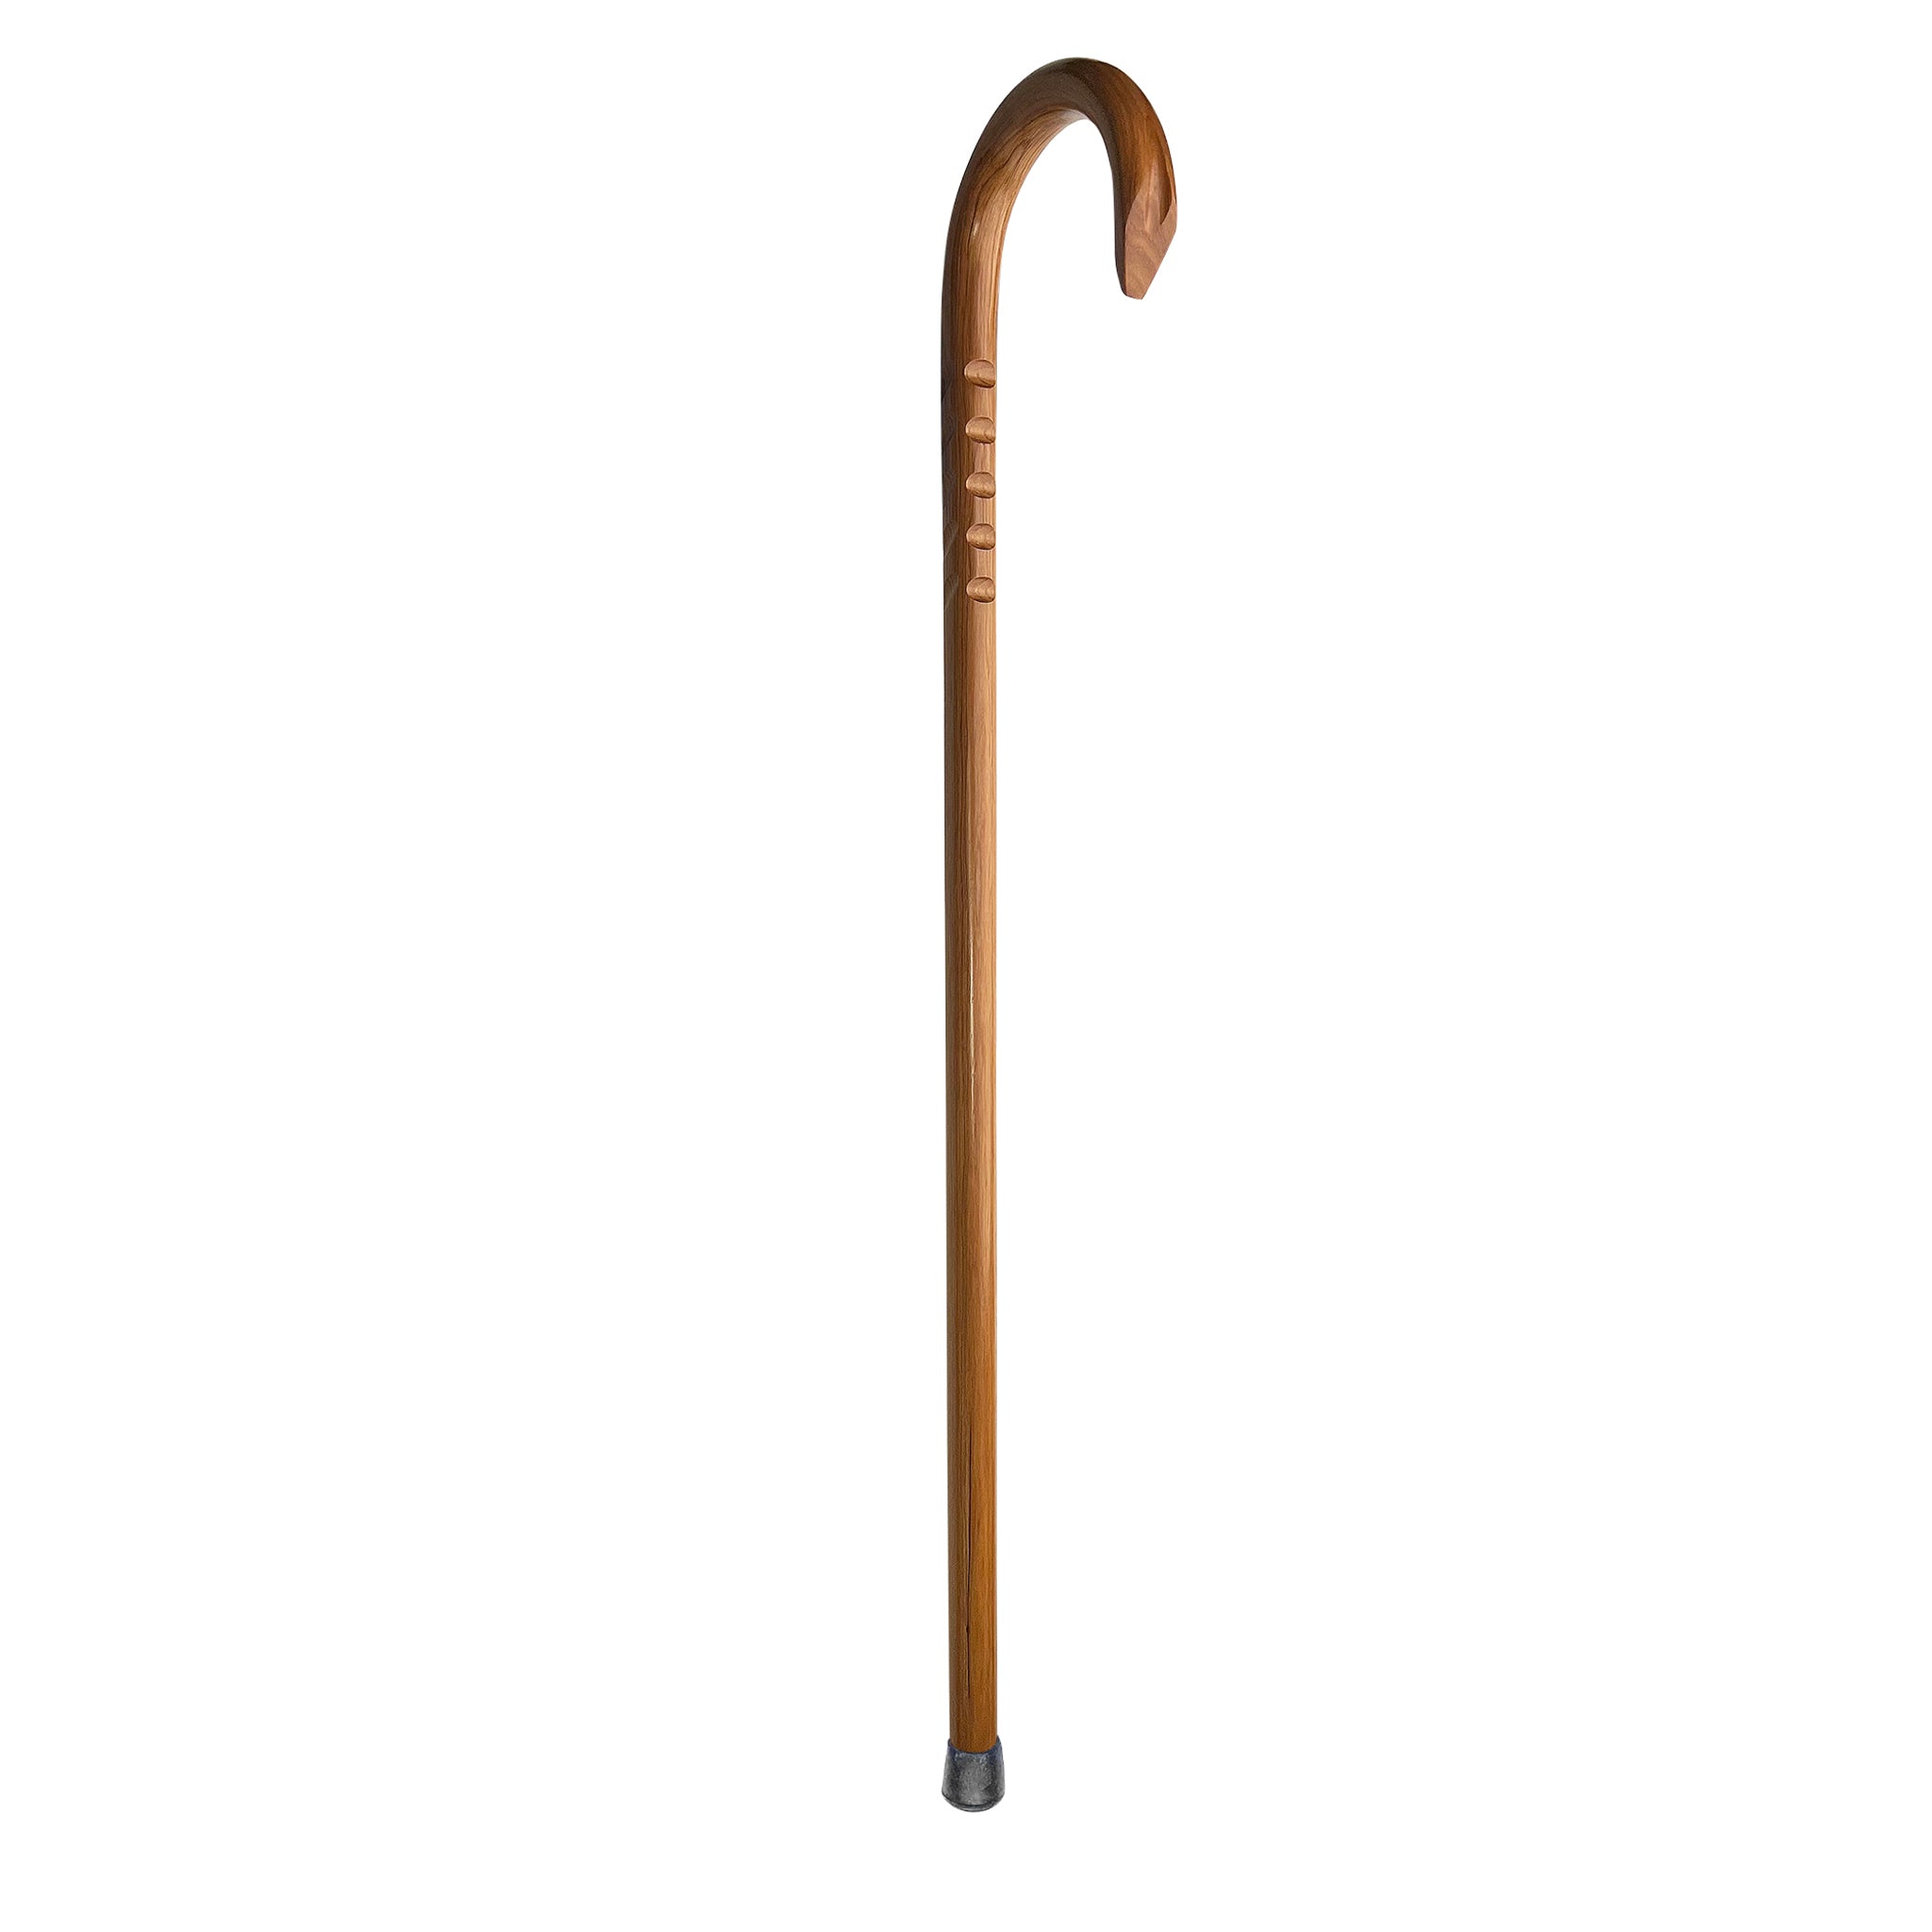 Bamboo Stick for Walking, Balance, Strength Training & Stretching